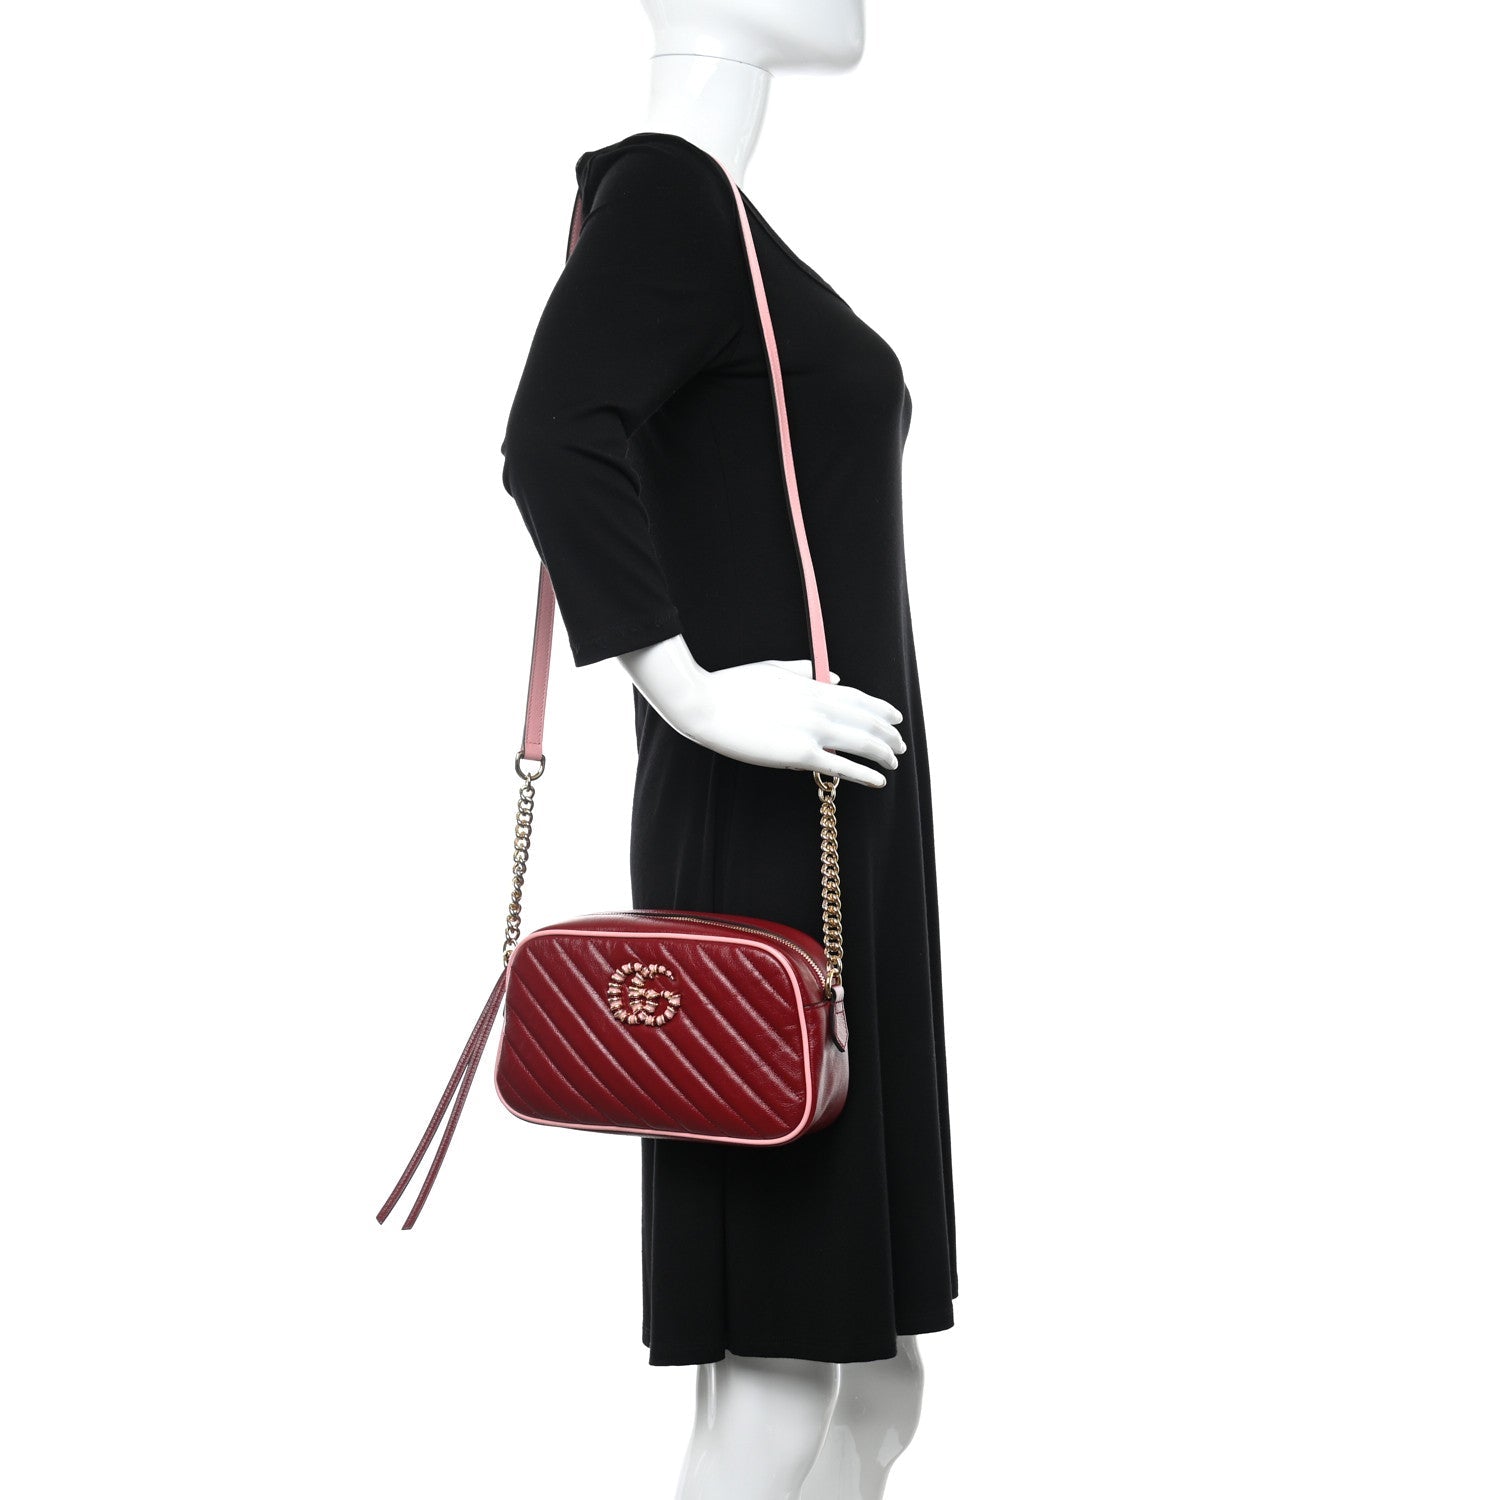 Gucci Marmont Red Leather Diagonal Matelasse Shoulder Bag